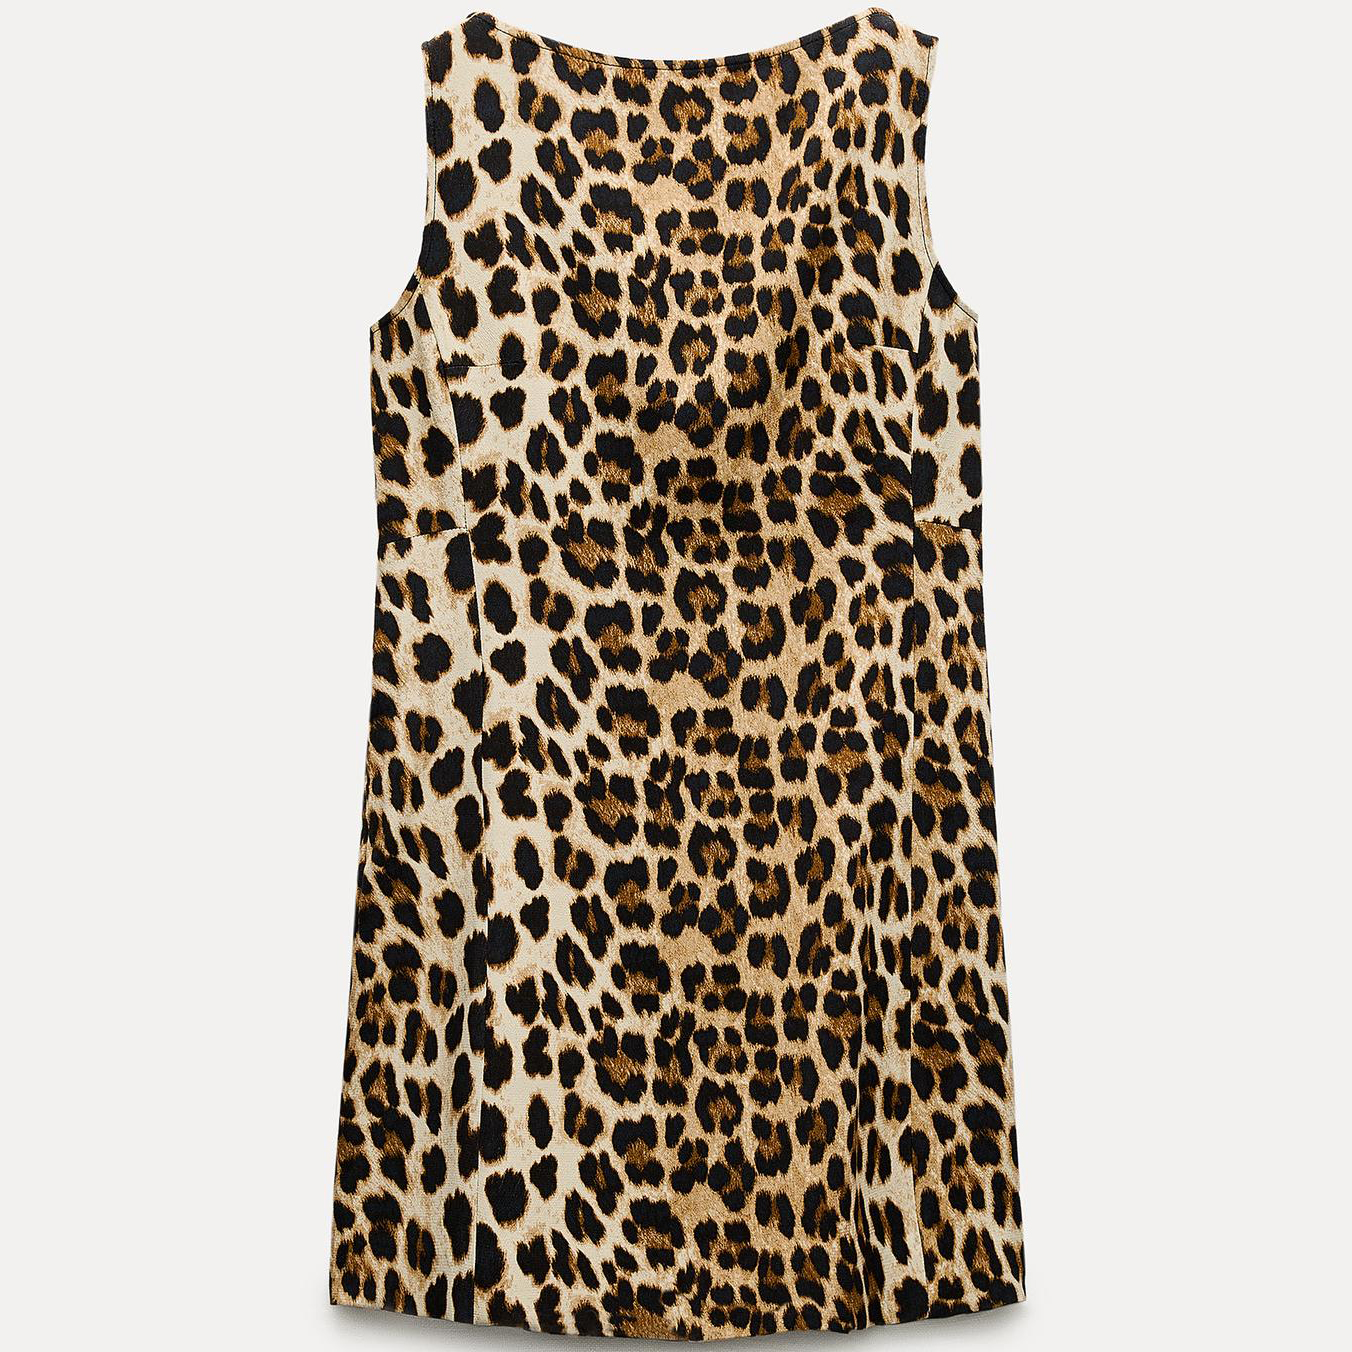 Платье Zara ZW Collection Leopard Animal Print, коричневый/мультиколор платье zara satin leopard animal print коричневый мультиколор